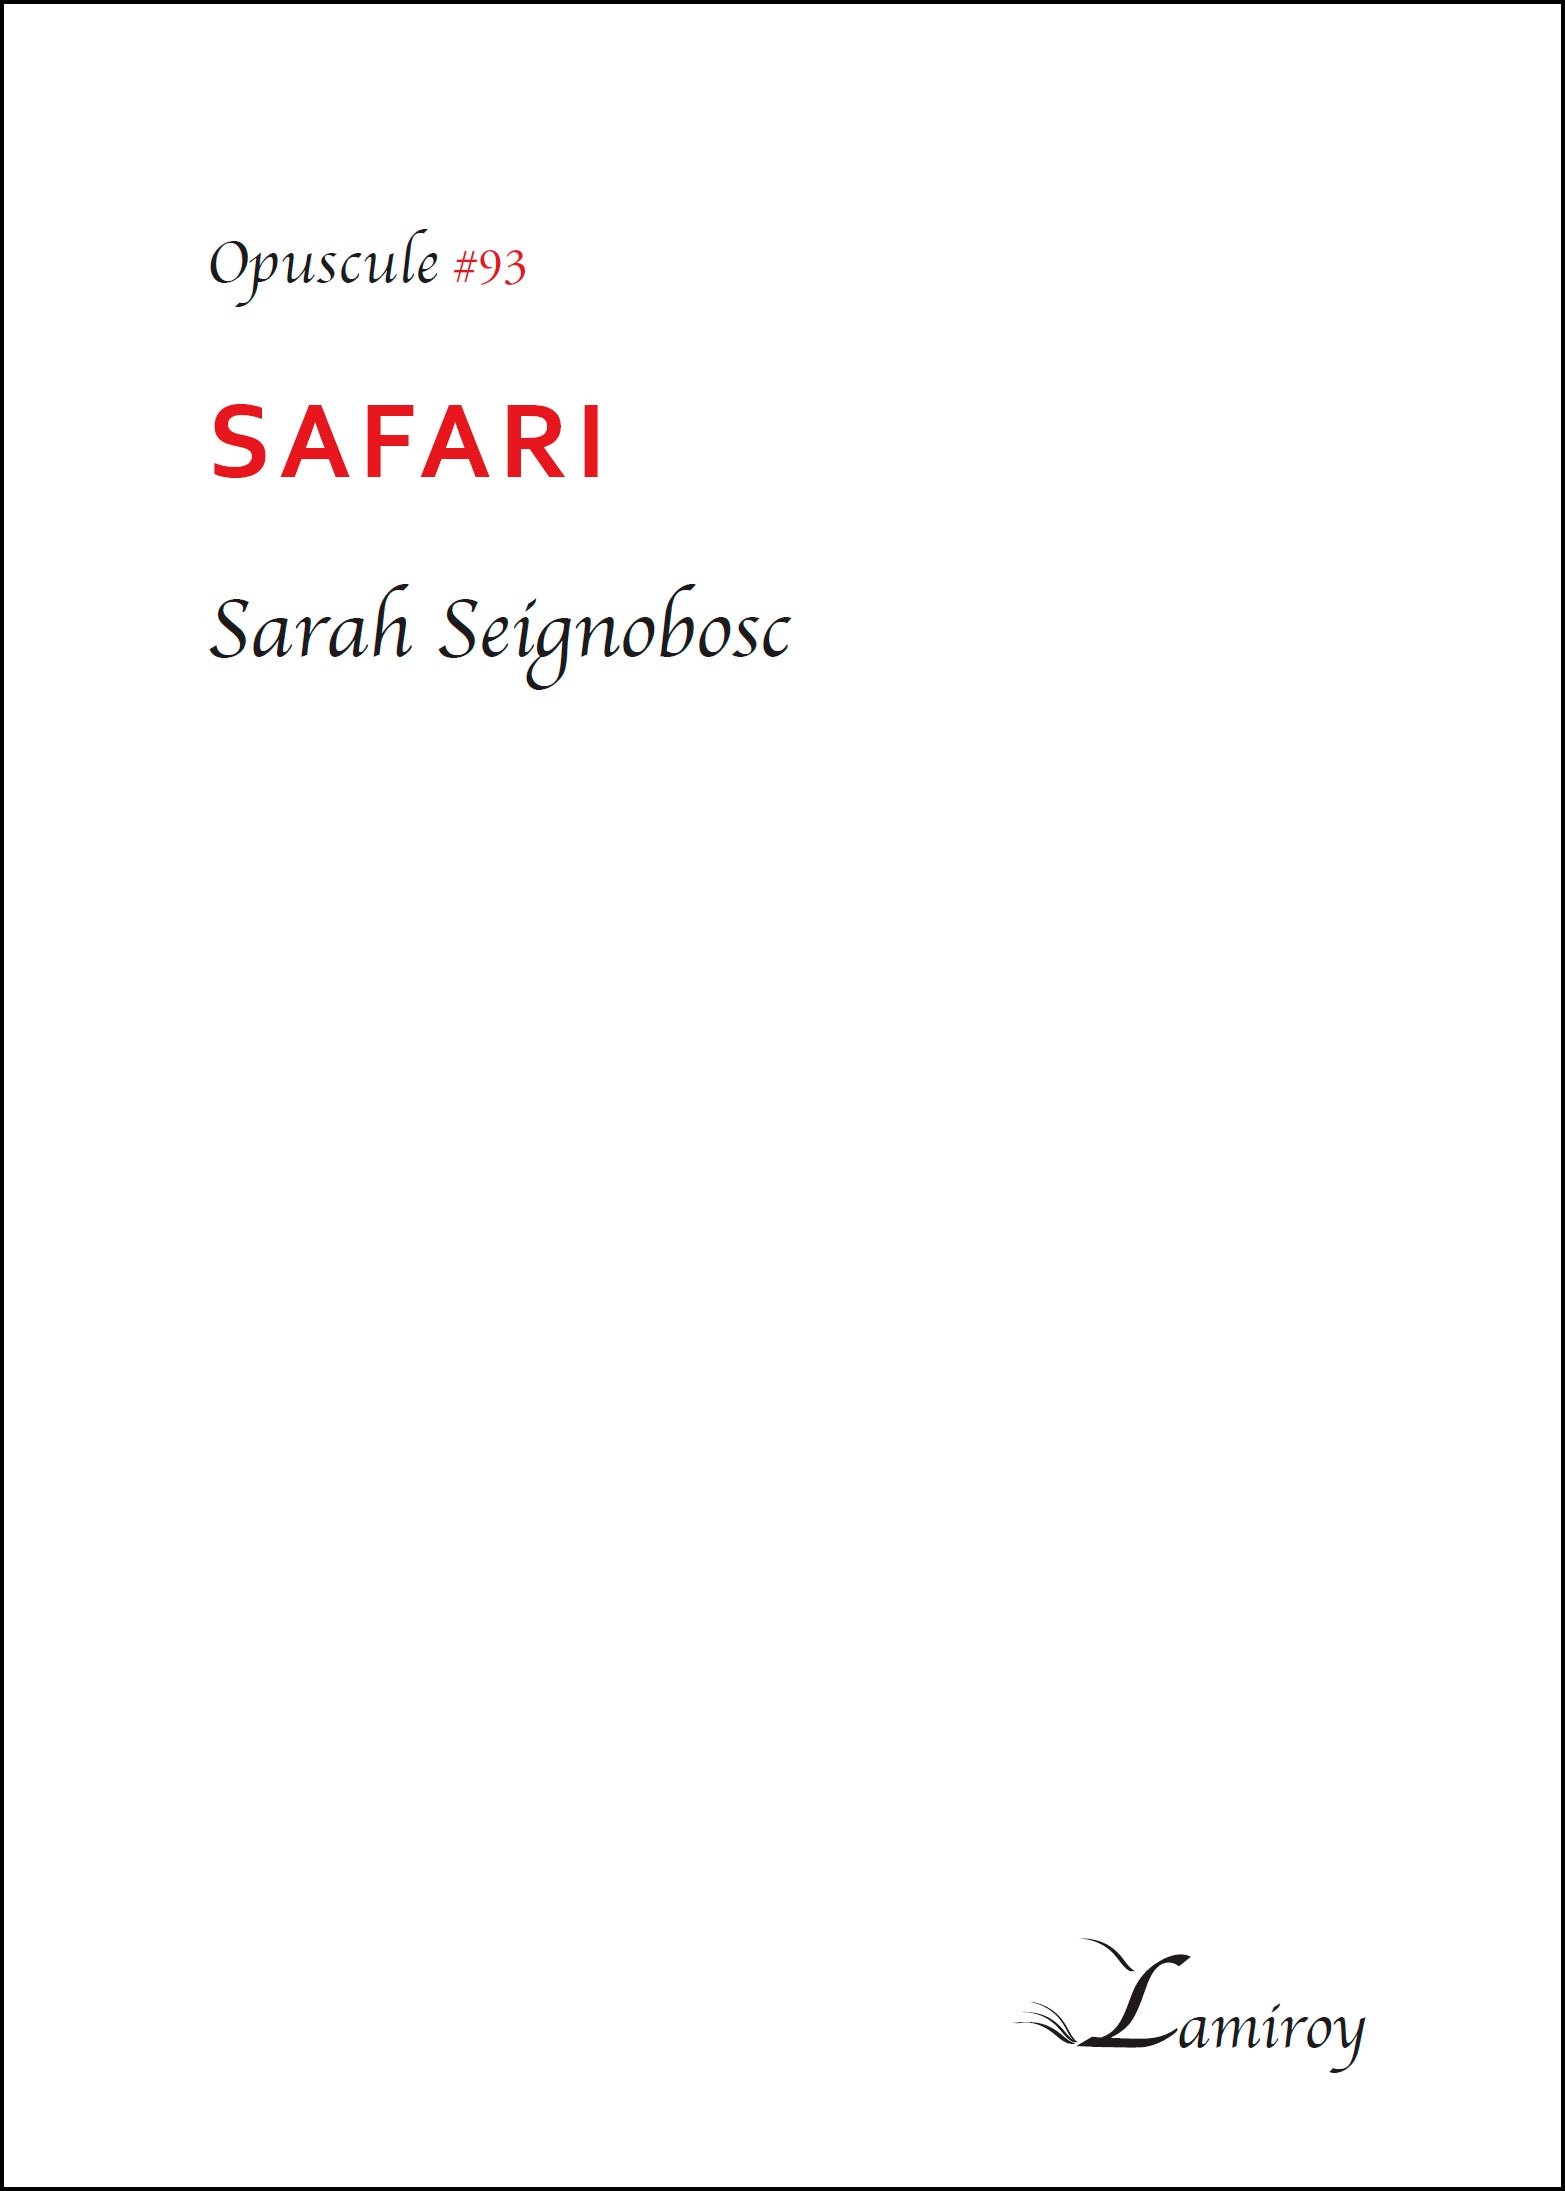 Safari #93